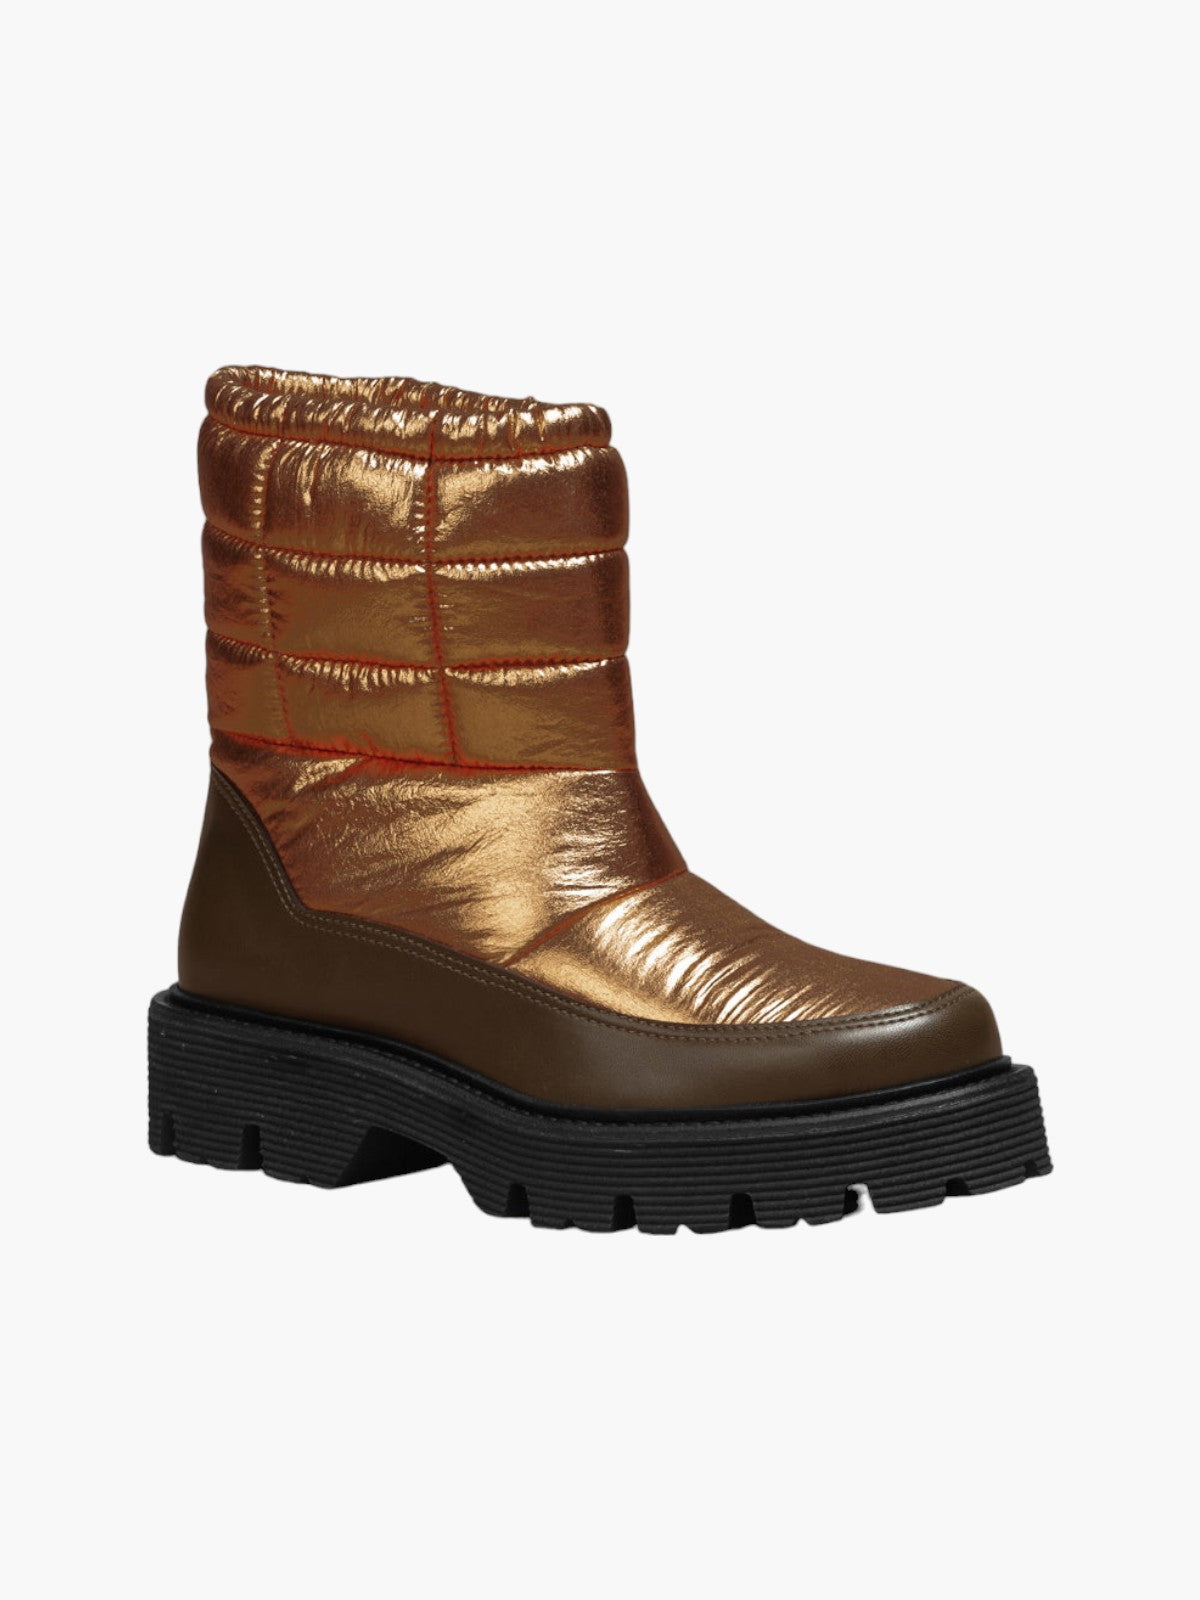 Sansin Boot | Copper Sansin Boot | Copper